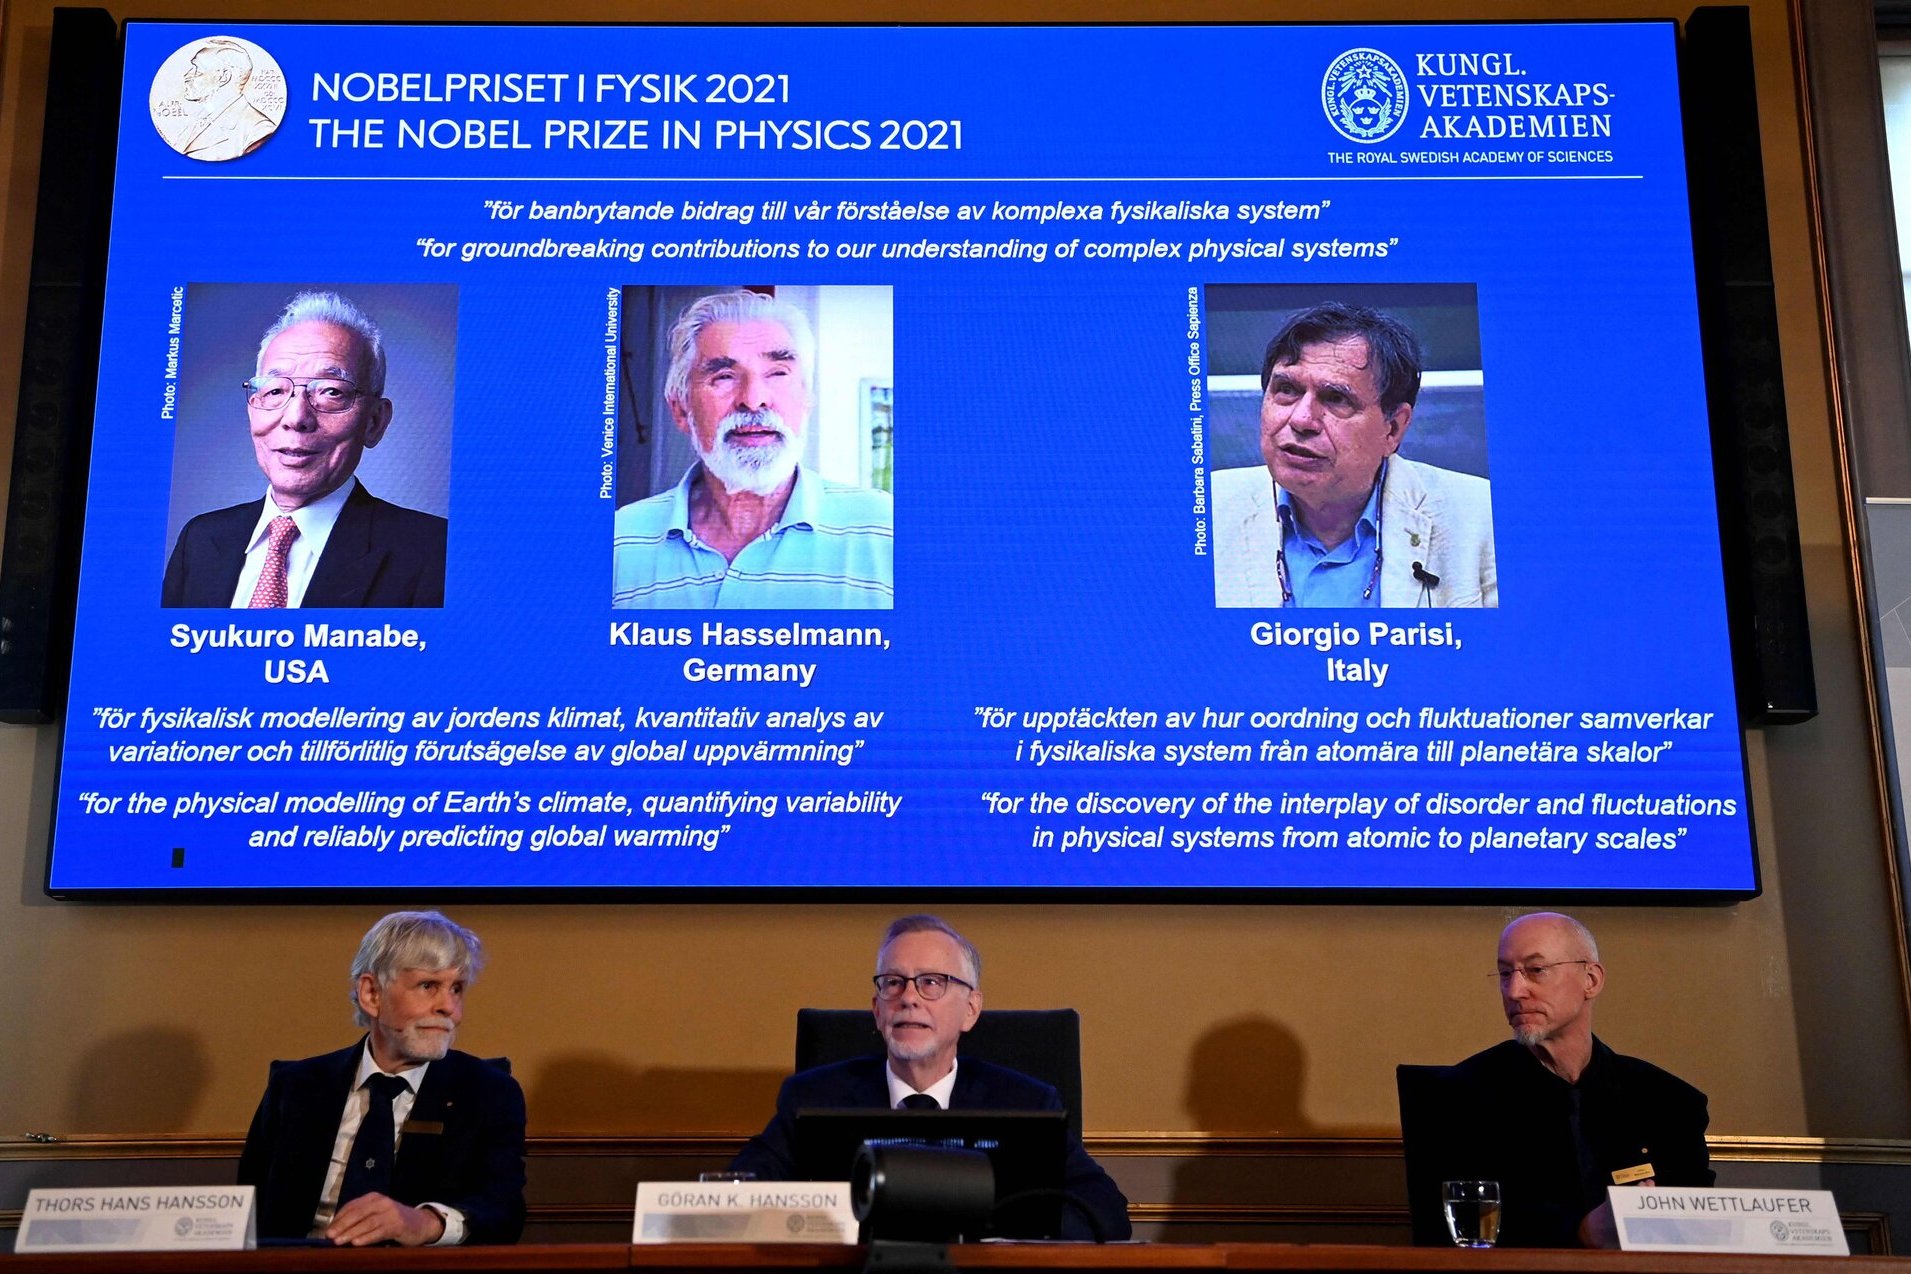 За моделирование климата Земли: Нобелевский комитет назвал имя лауреатов премии по физике